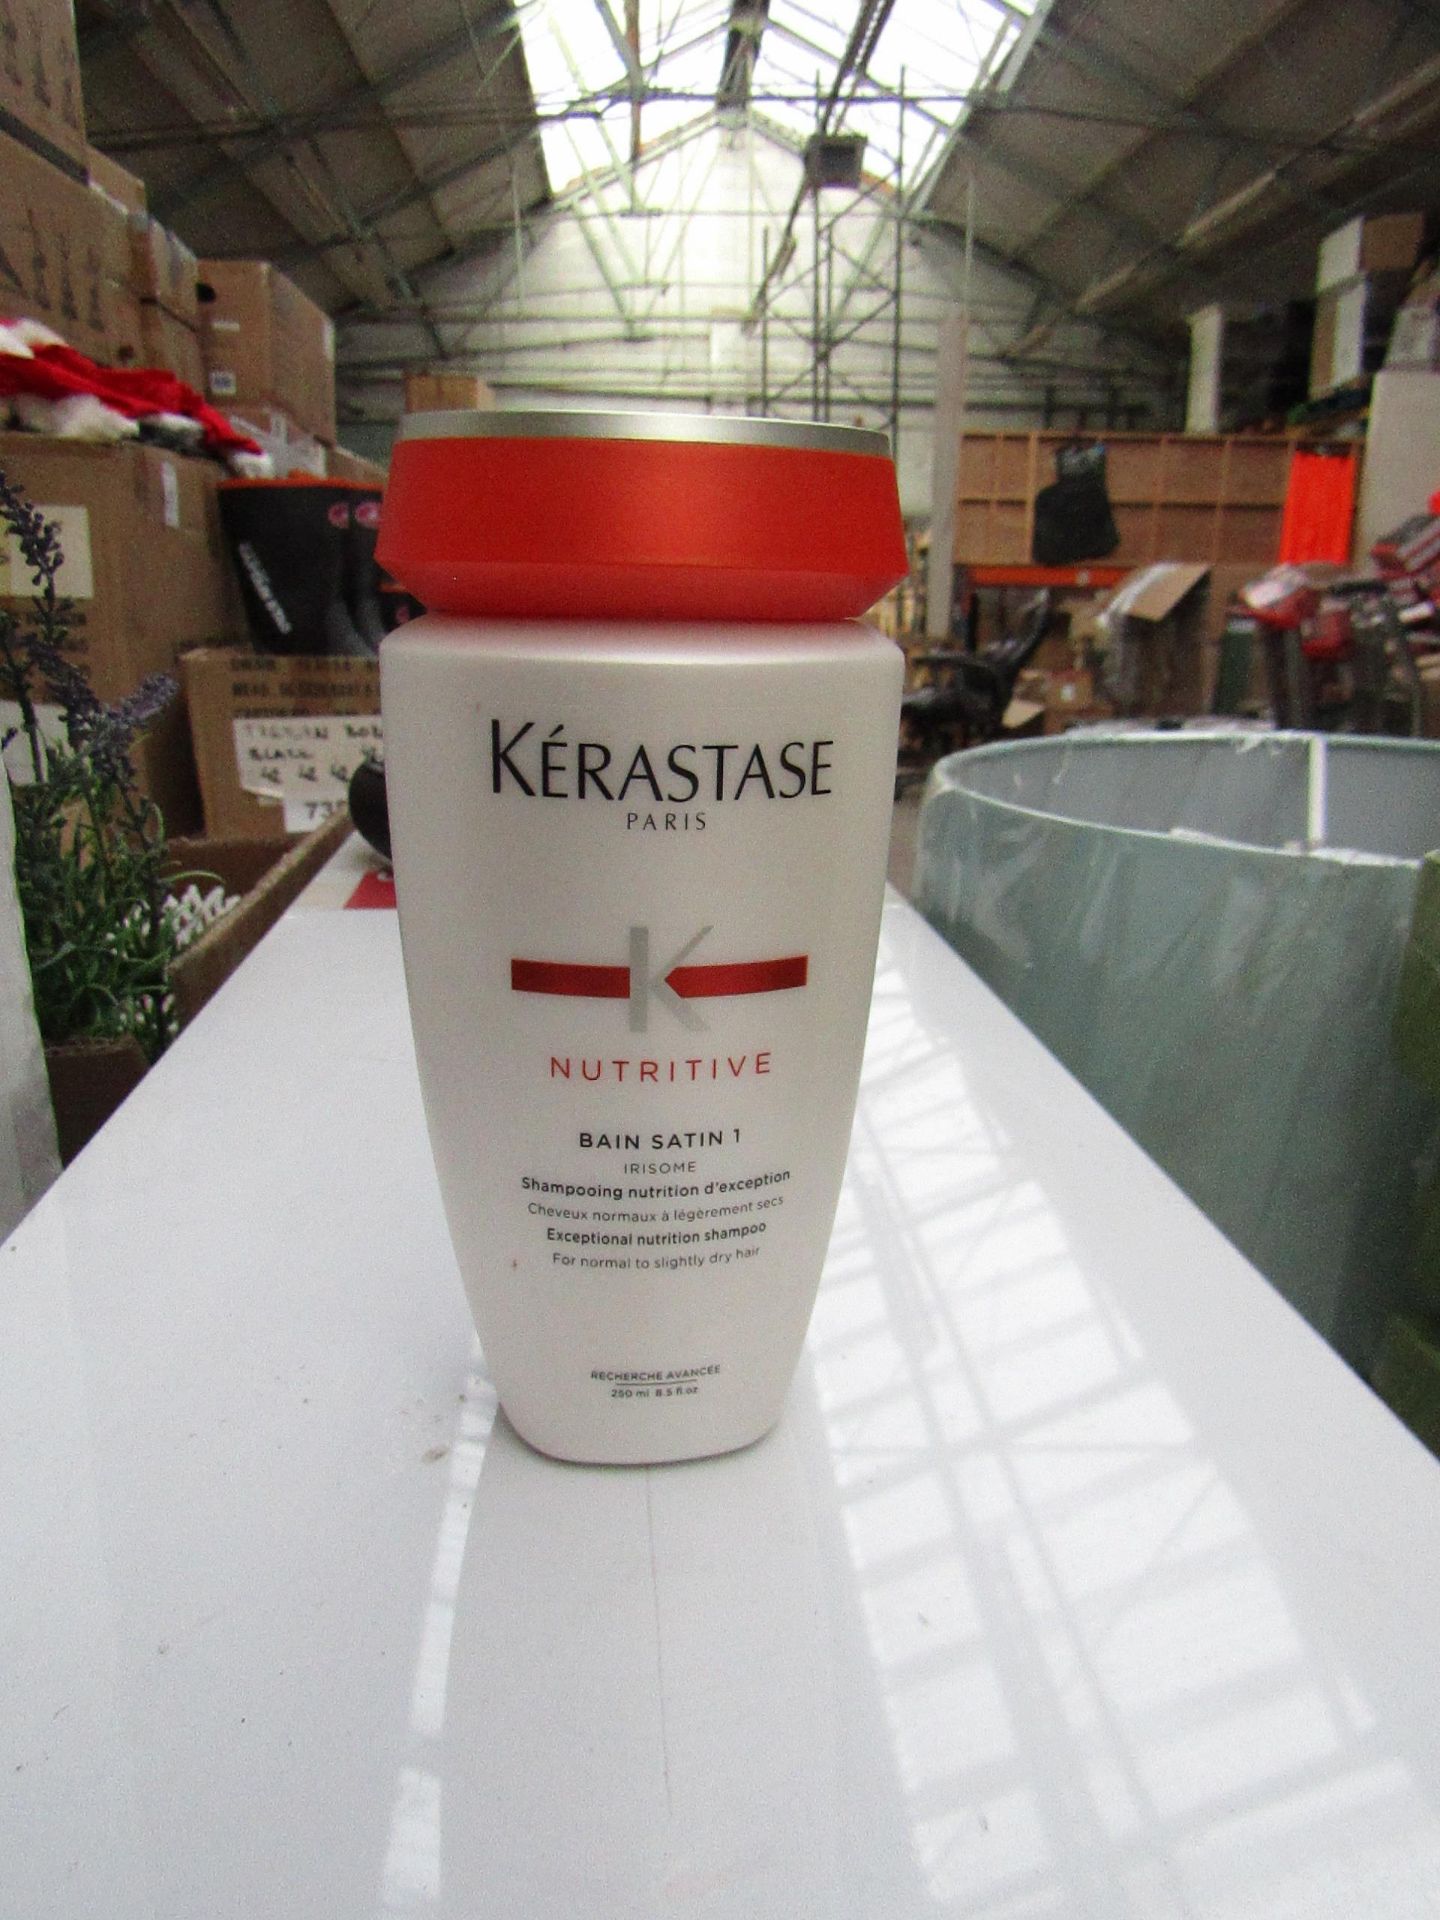 Kerastase - Nutritive Bain Satin 1 Shampoo - 250ml - New & Sealed. RRP £18.00